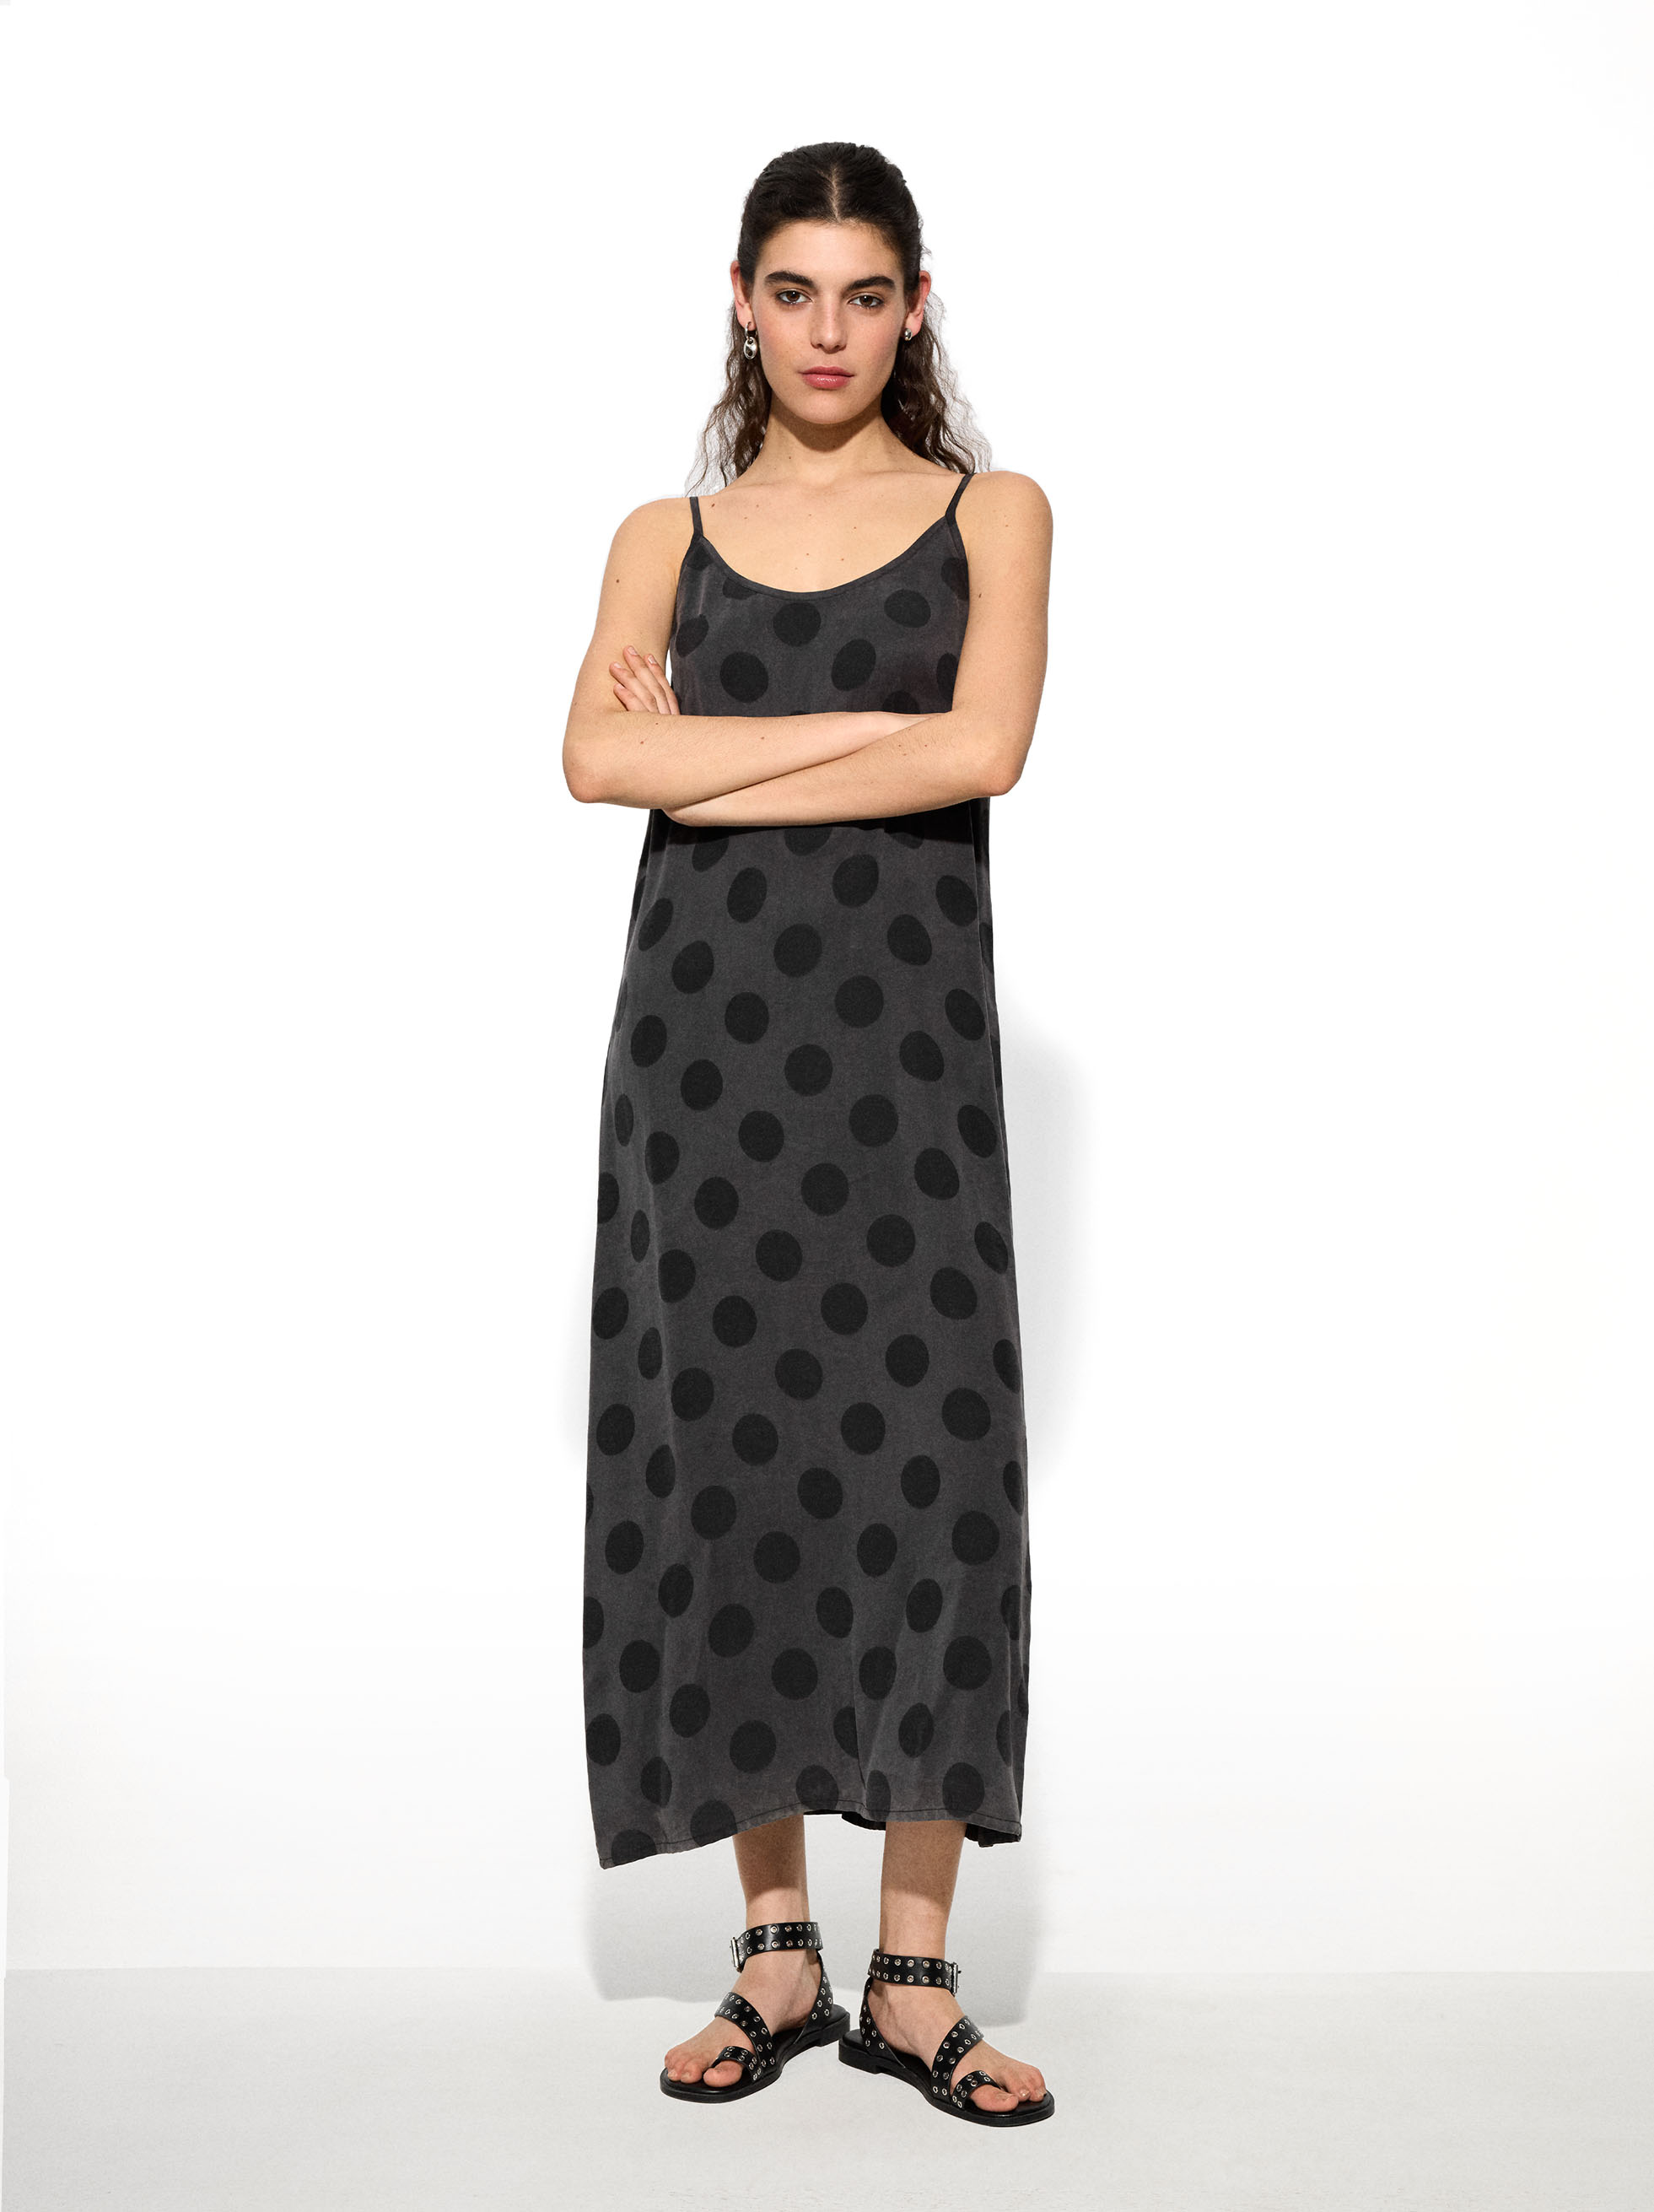 Polka Dot Strappy Dress image number 0.0